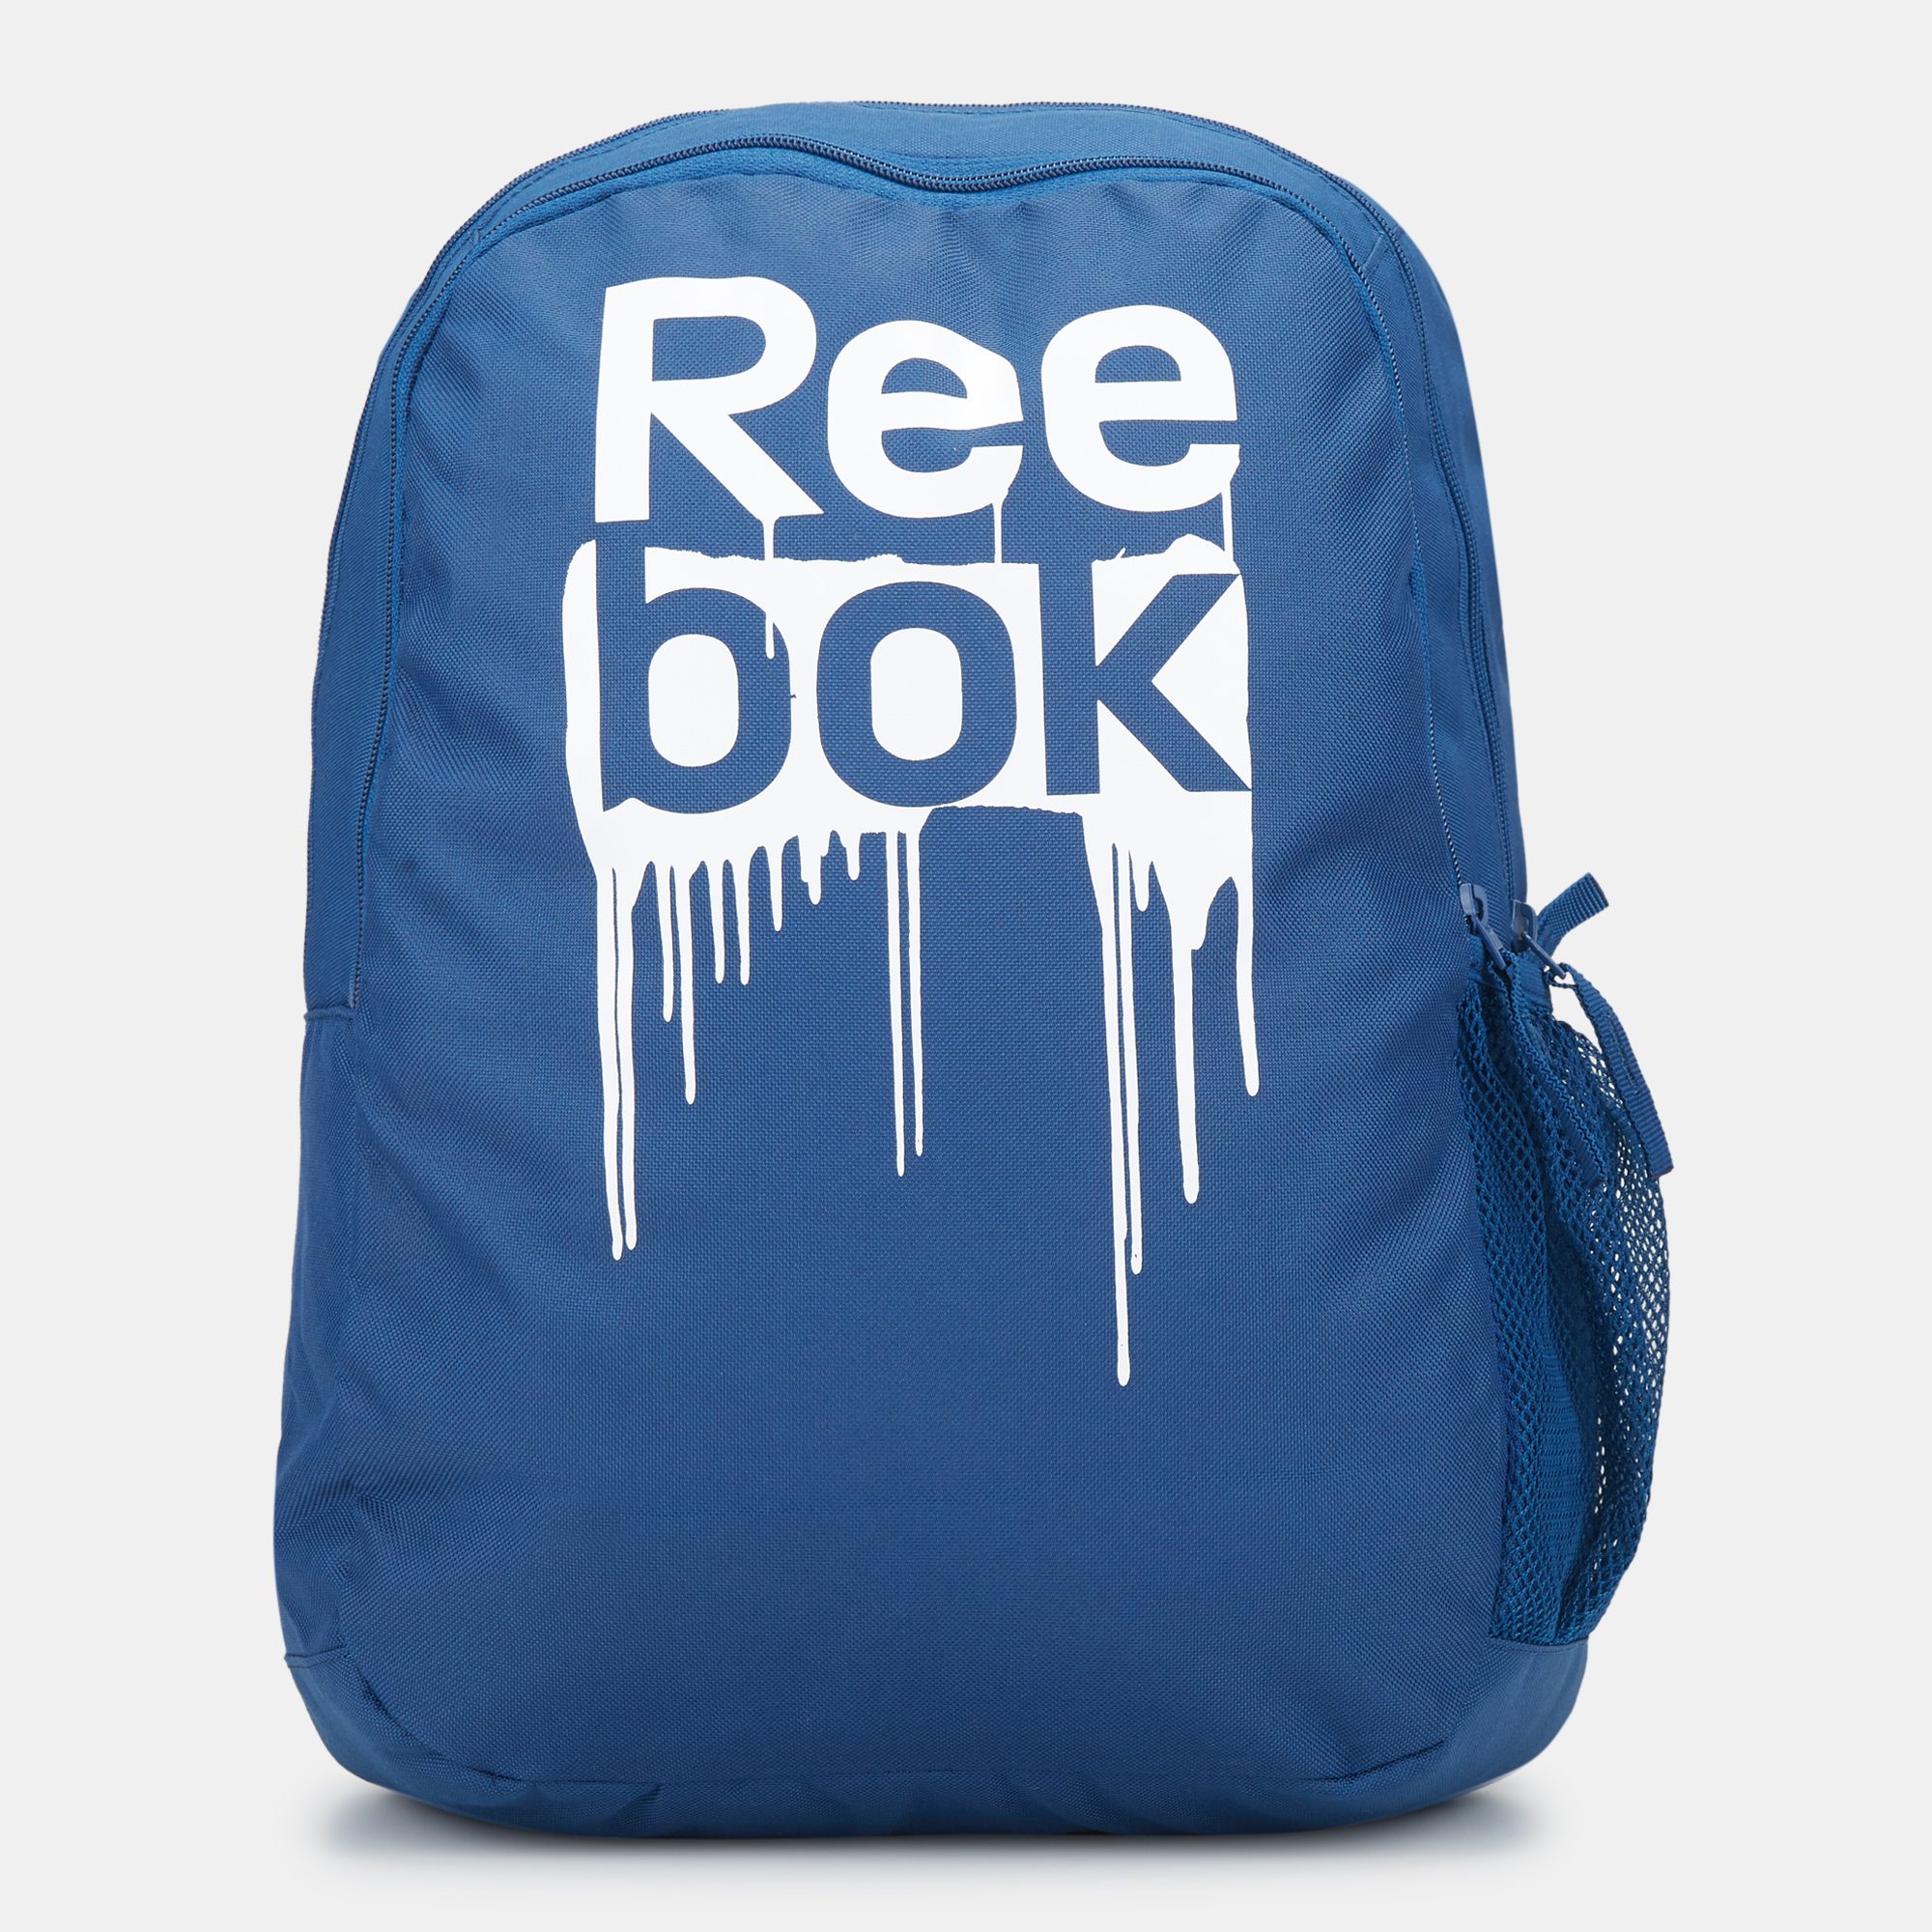 reebok bags for boys